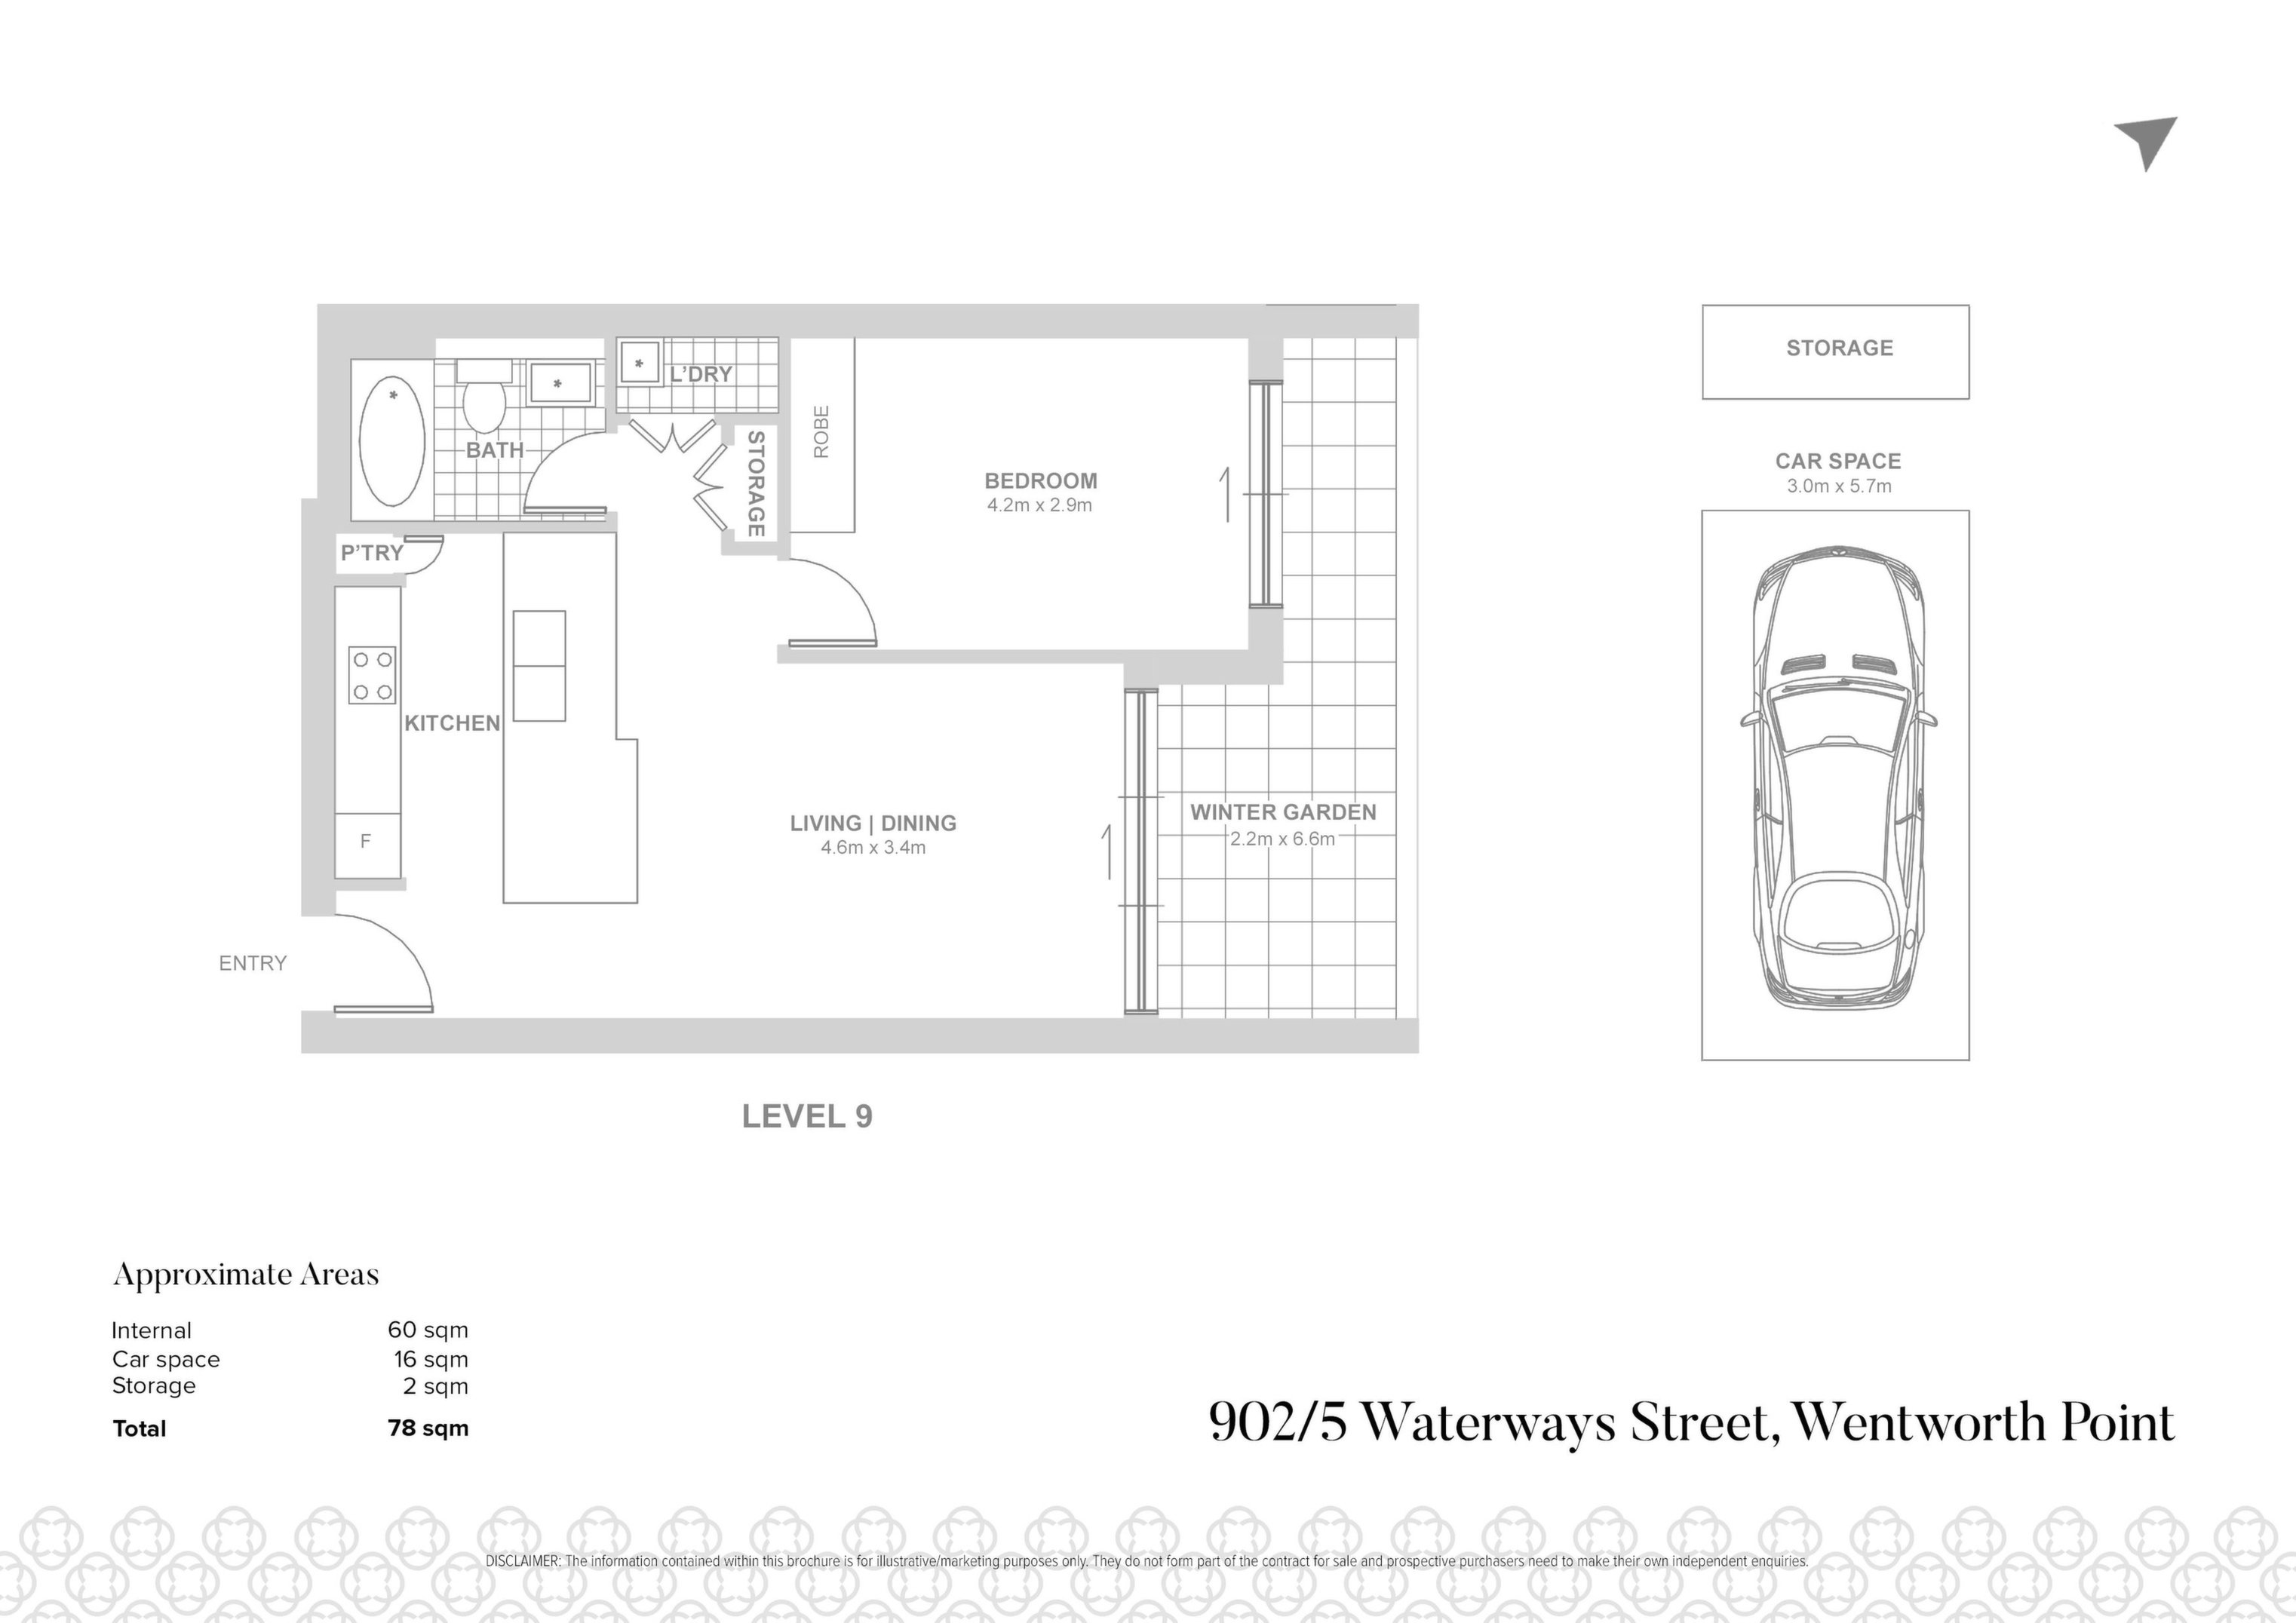 902/5 Waterways St, Wentworth Point Sold by Chidiac Realty - floorplan